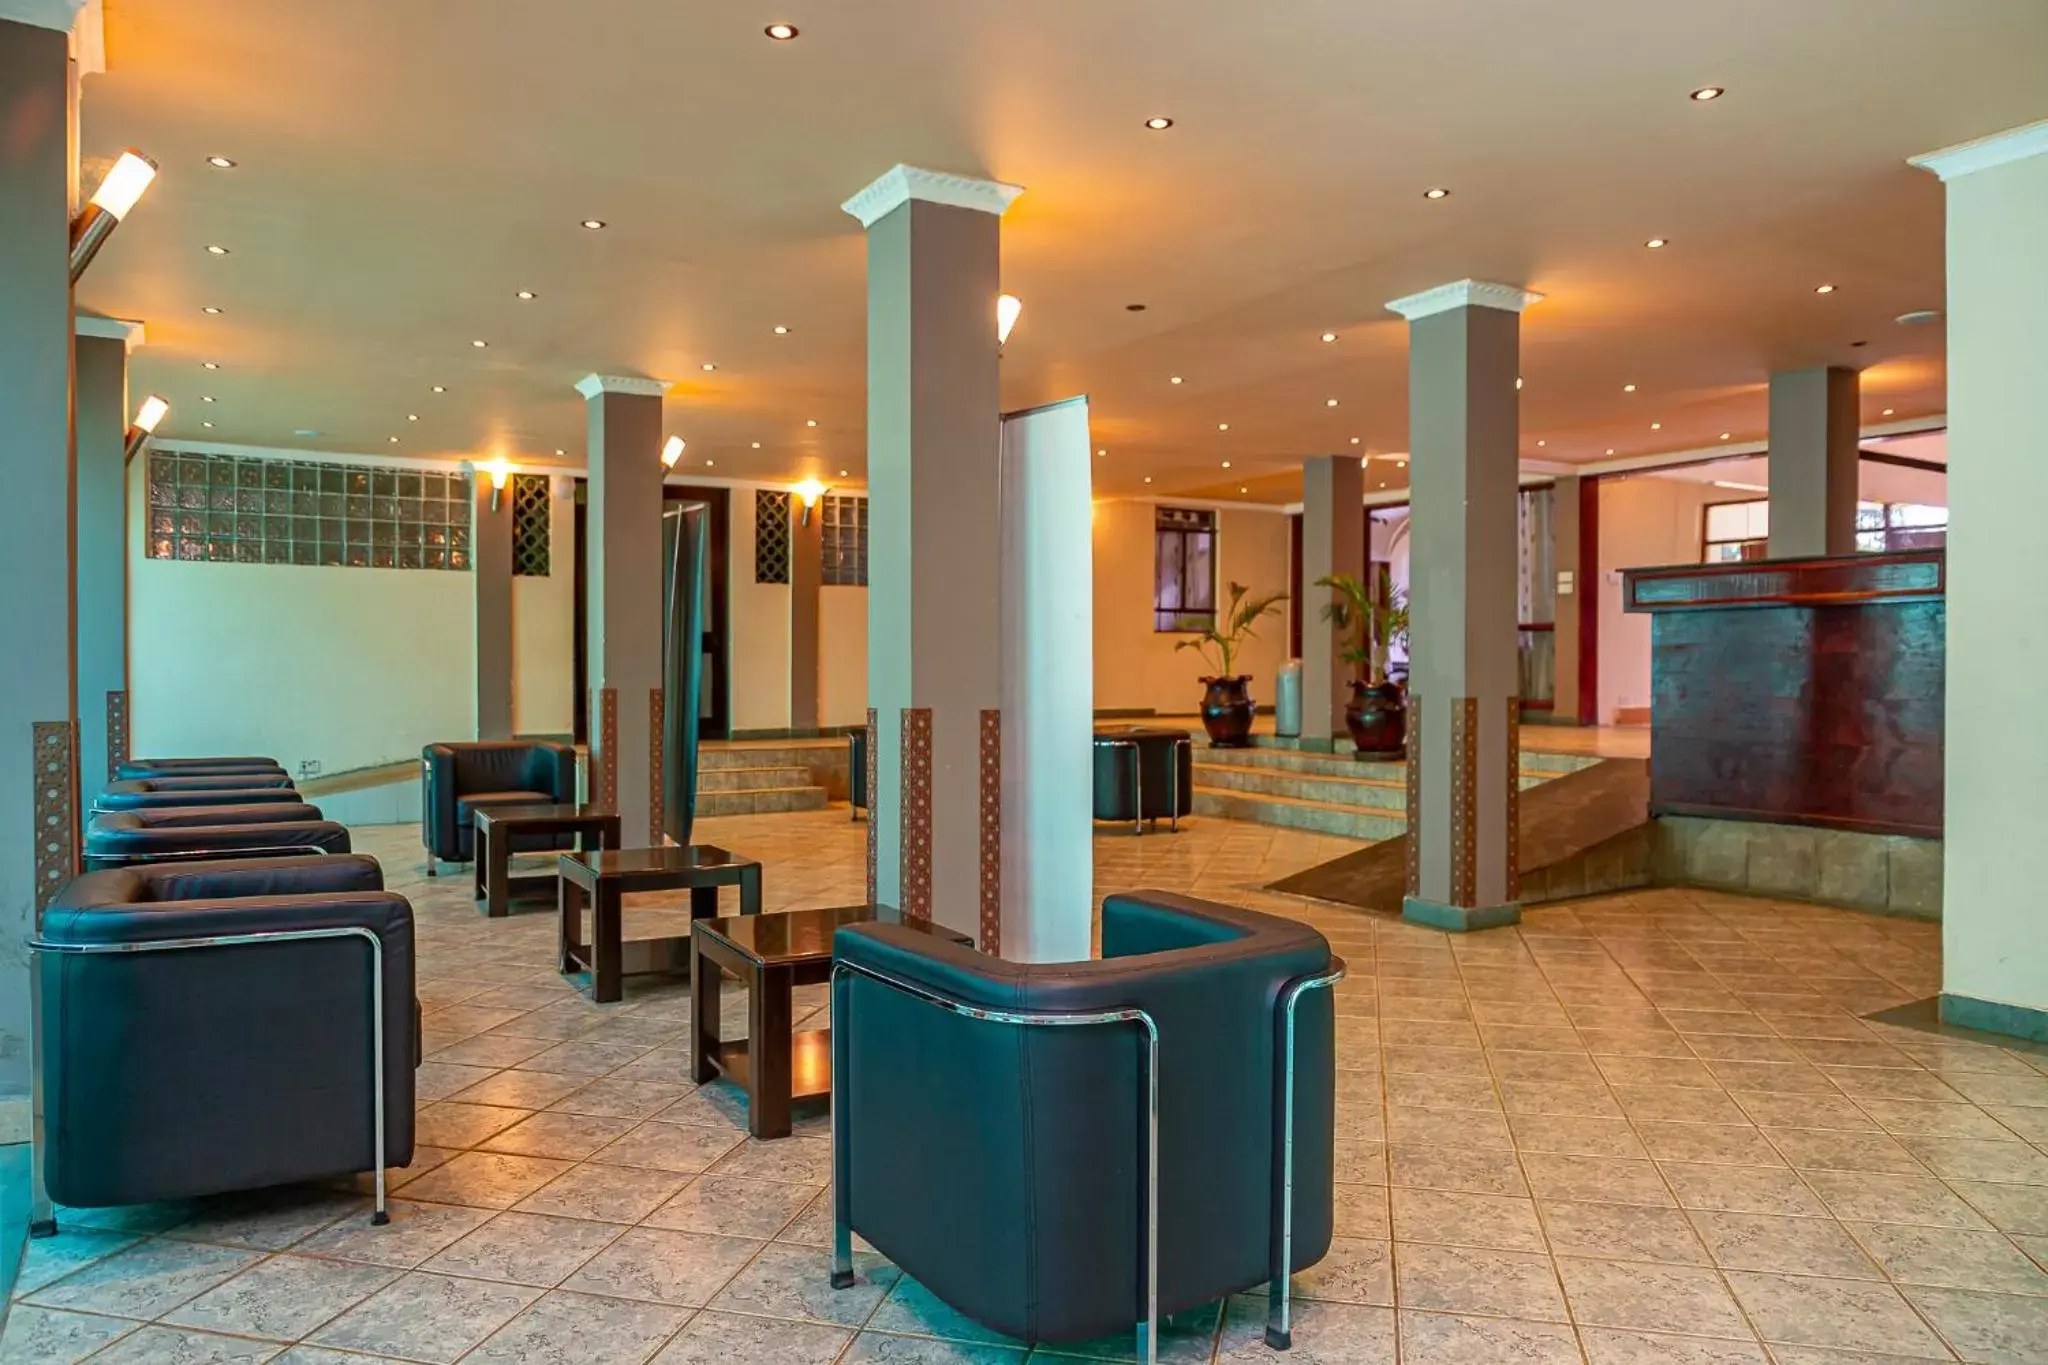 Lobby or reception, Lobby/Reception in Desmond Tutu Conference Centre